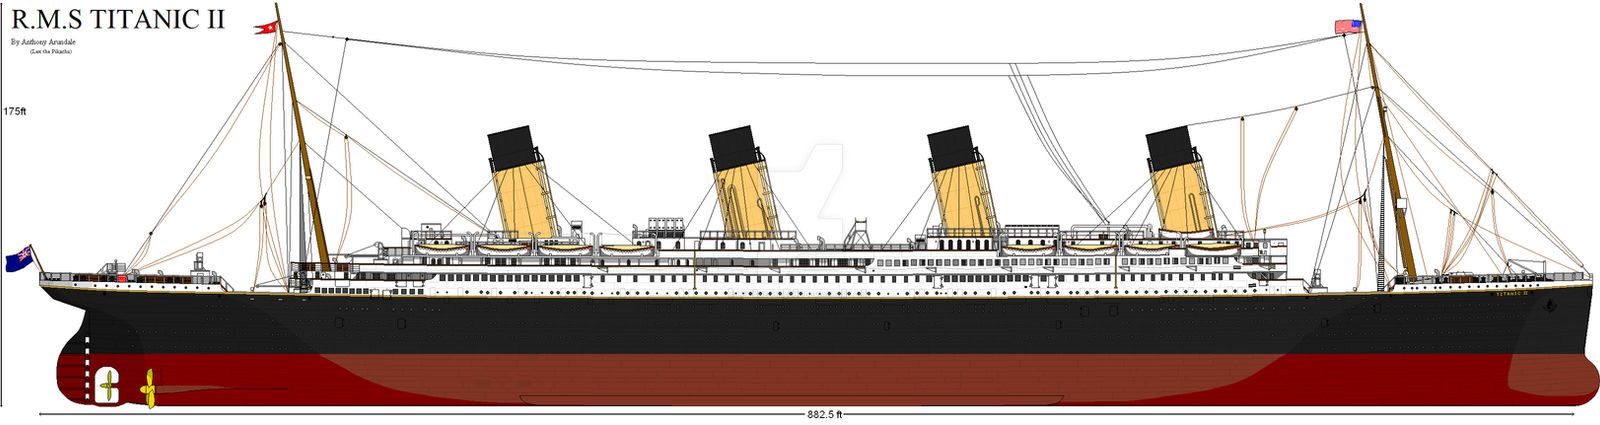 RMS Titanic II by Lex-the-Pikachu on DeviantArt